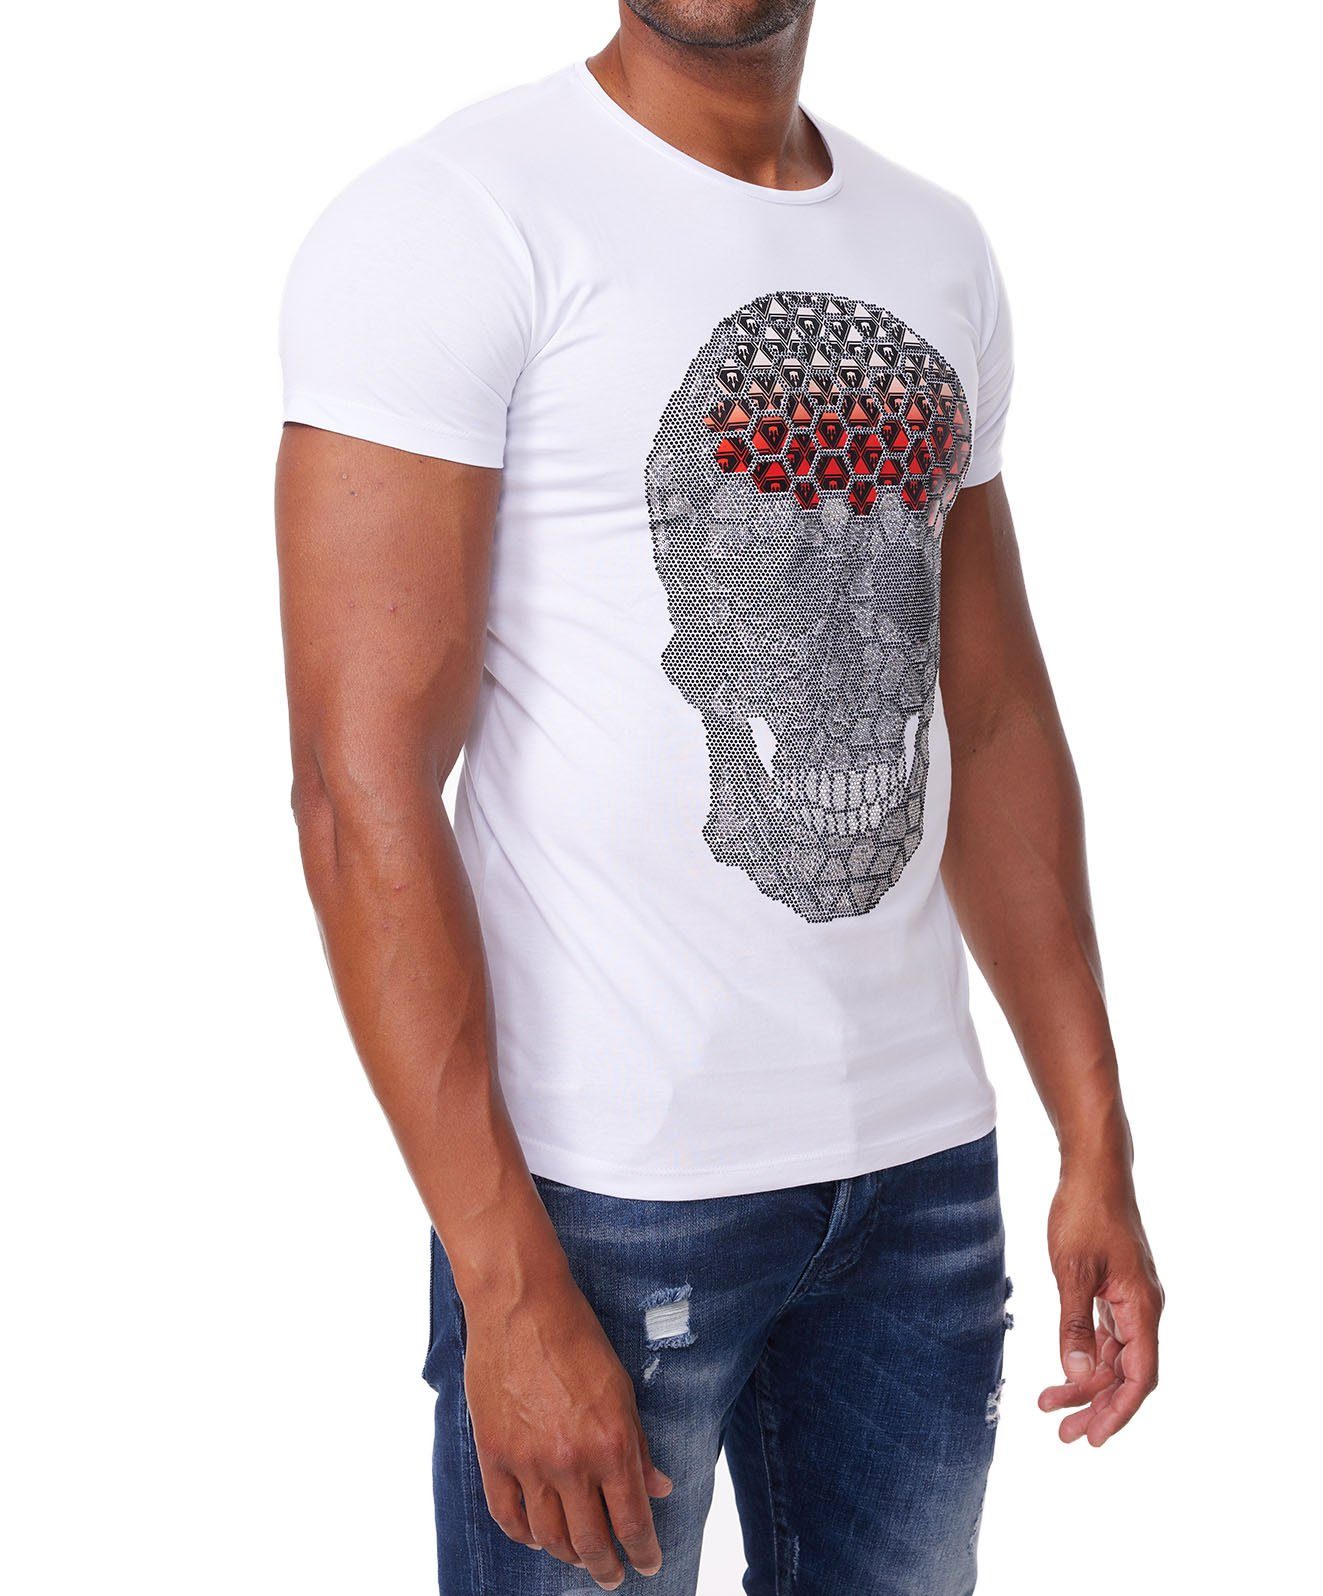 TRUENO T-Shirt Lässiges T-Shirt Kurzarm mit besonderem Herren Totenkopf Motiv